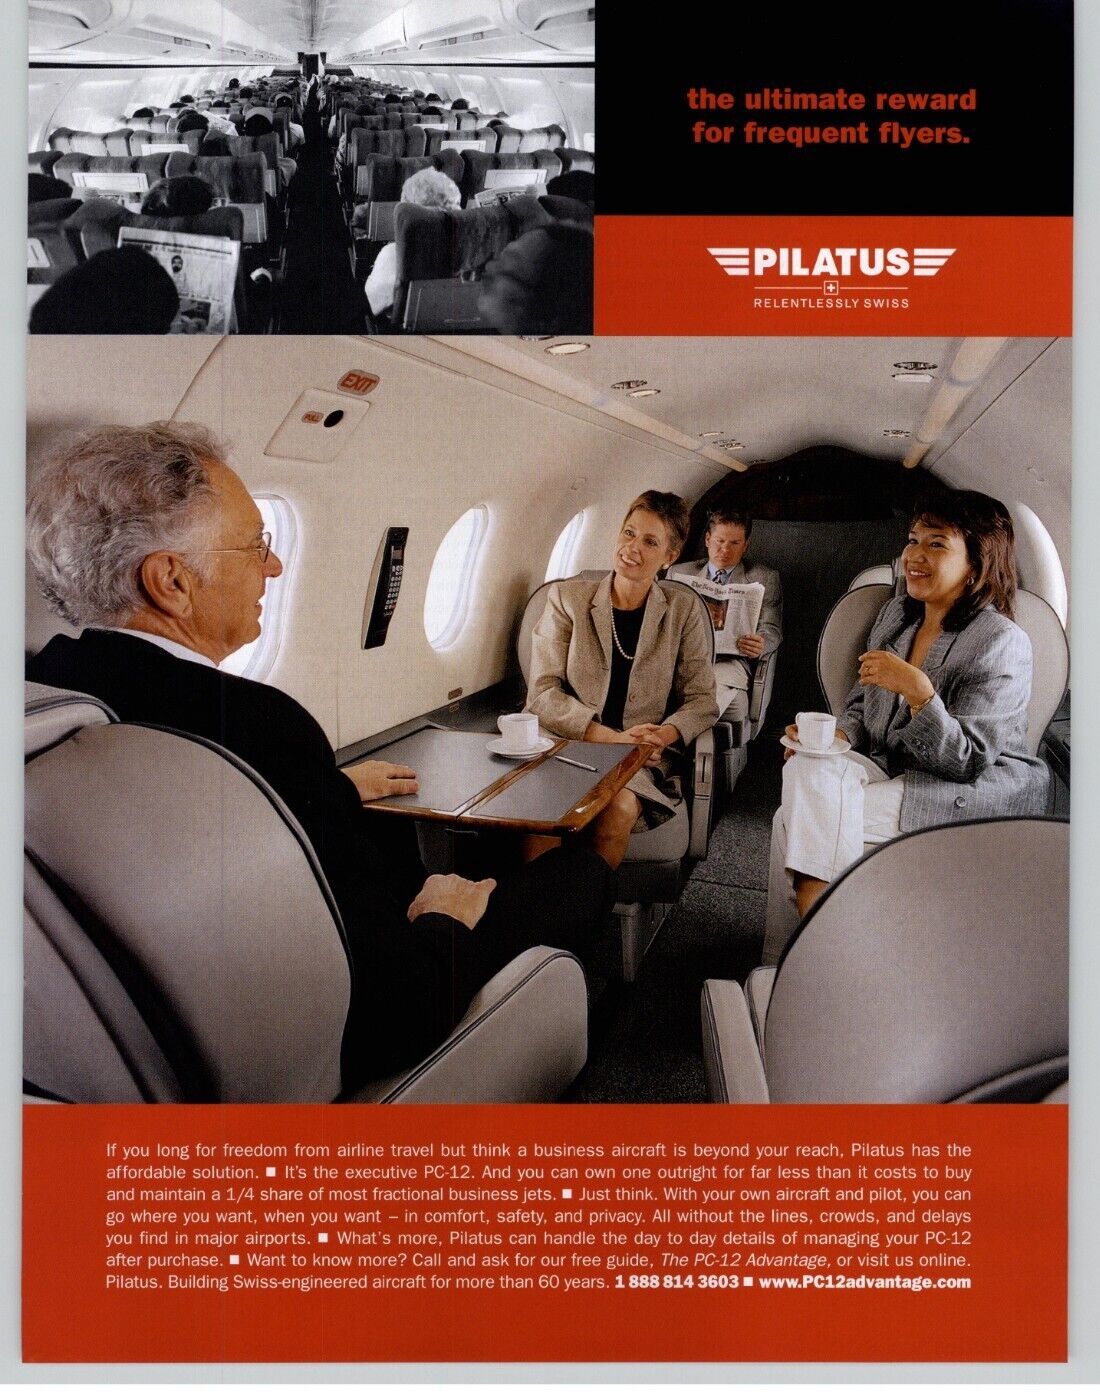 2002 Pilatus Executive PC-12 Private Jet Passenger Area Photo Vintage Print Ad 